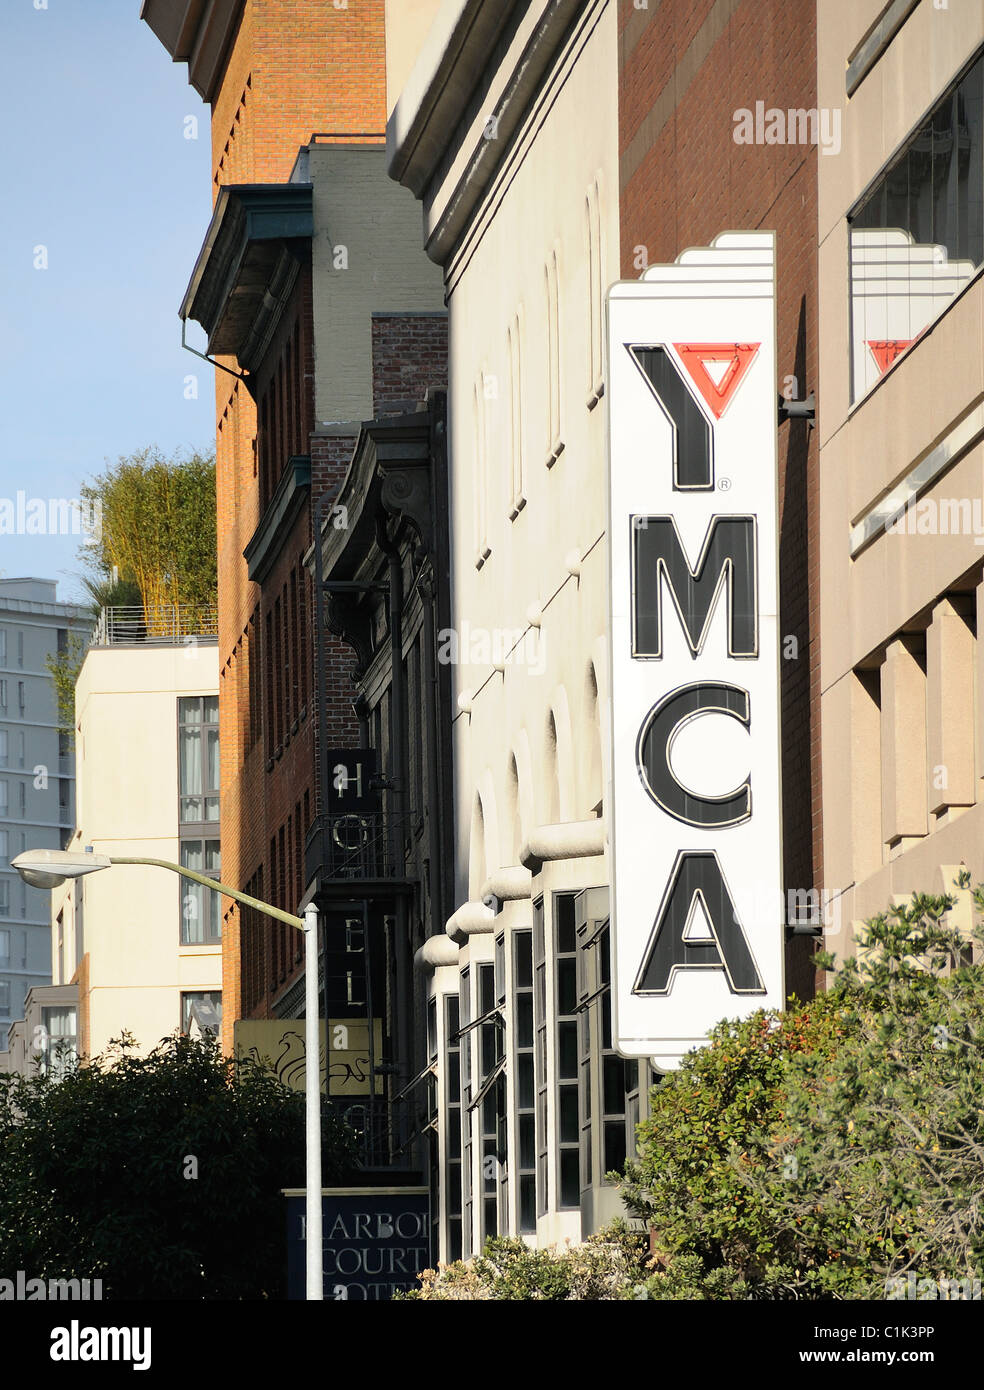 YMCA (Young Men's Christian Association) Stock Photo